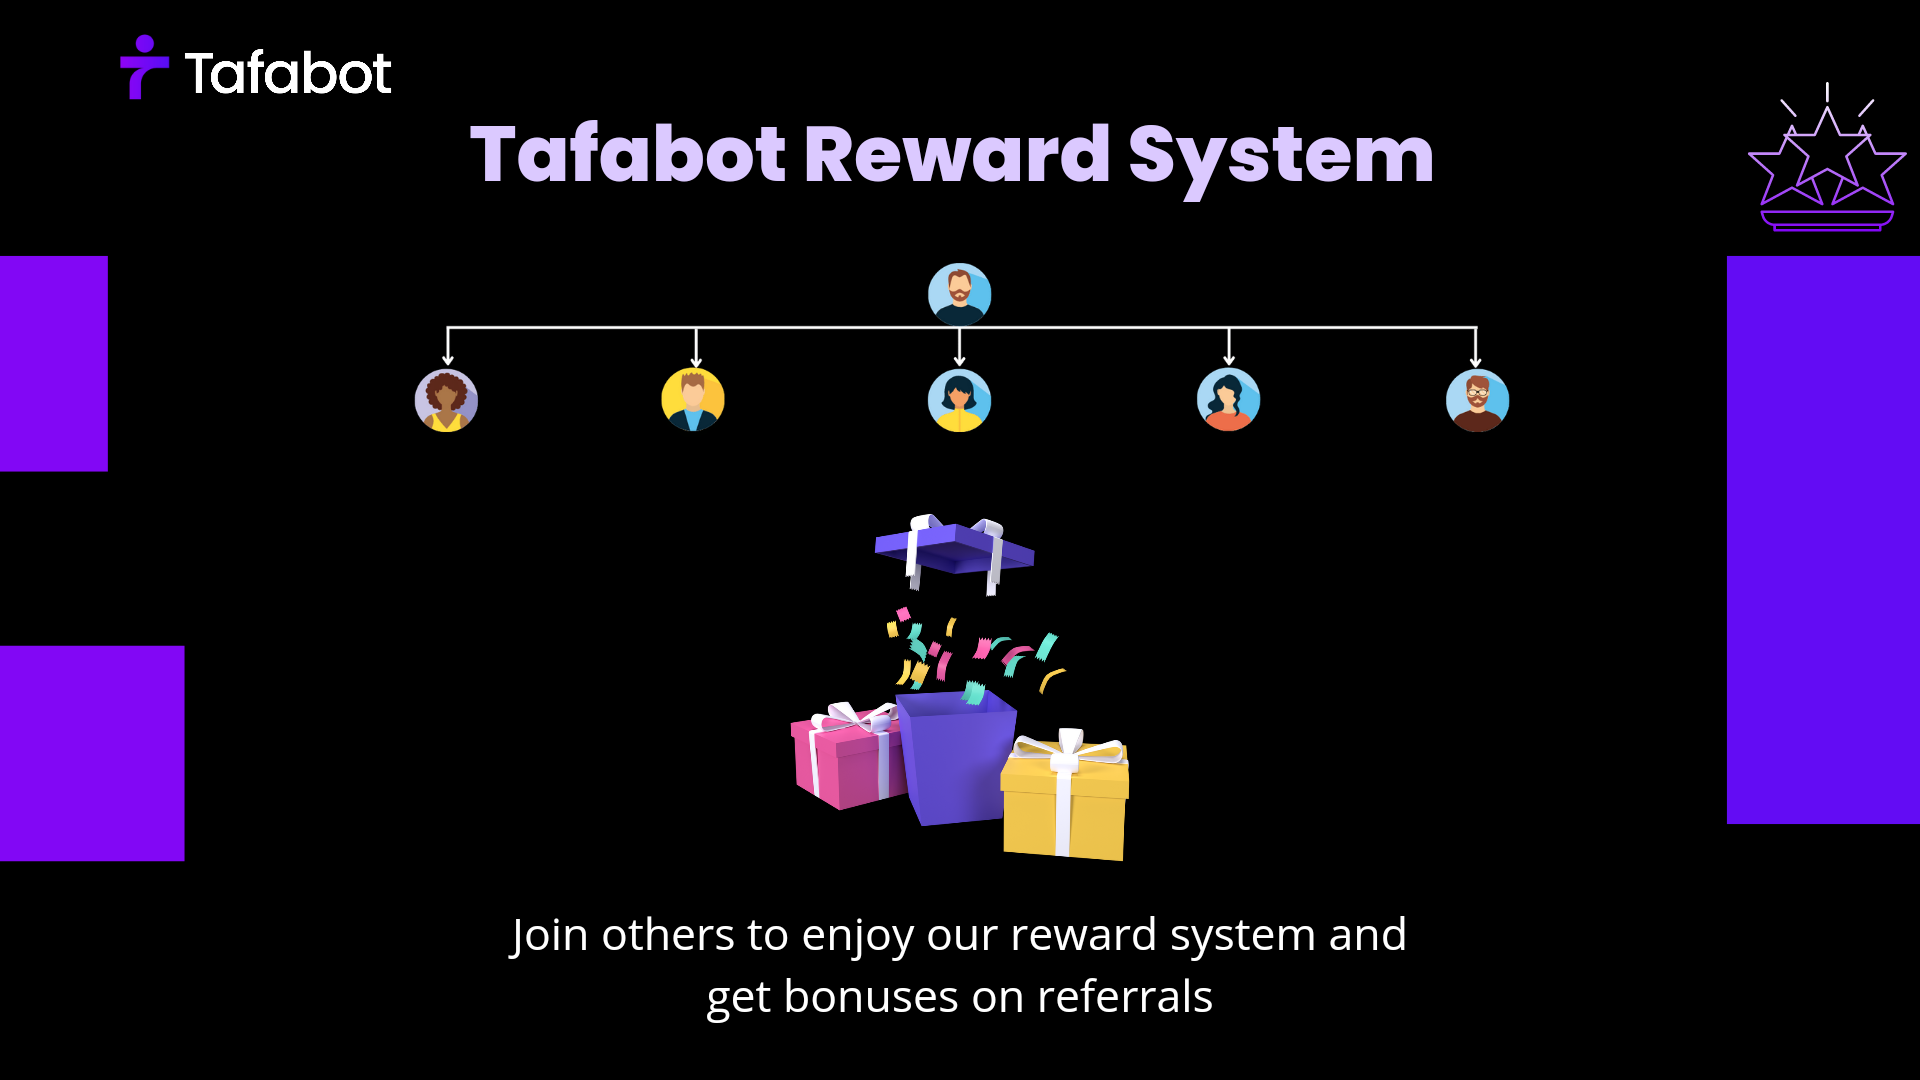 Tafabot Reward System